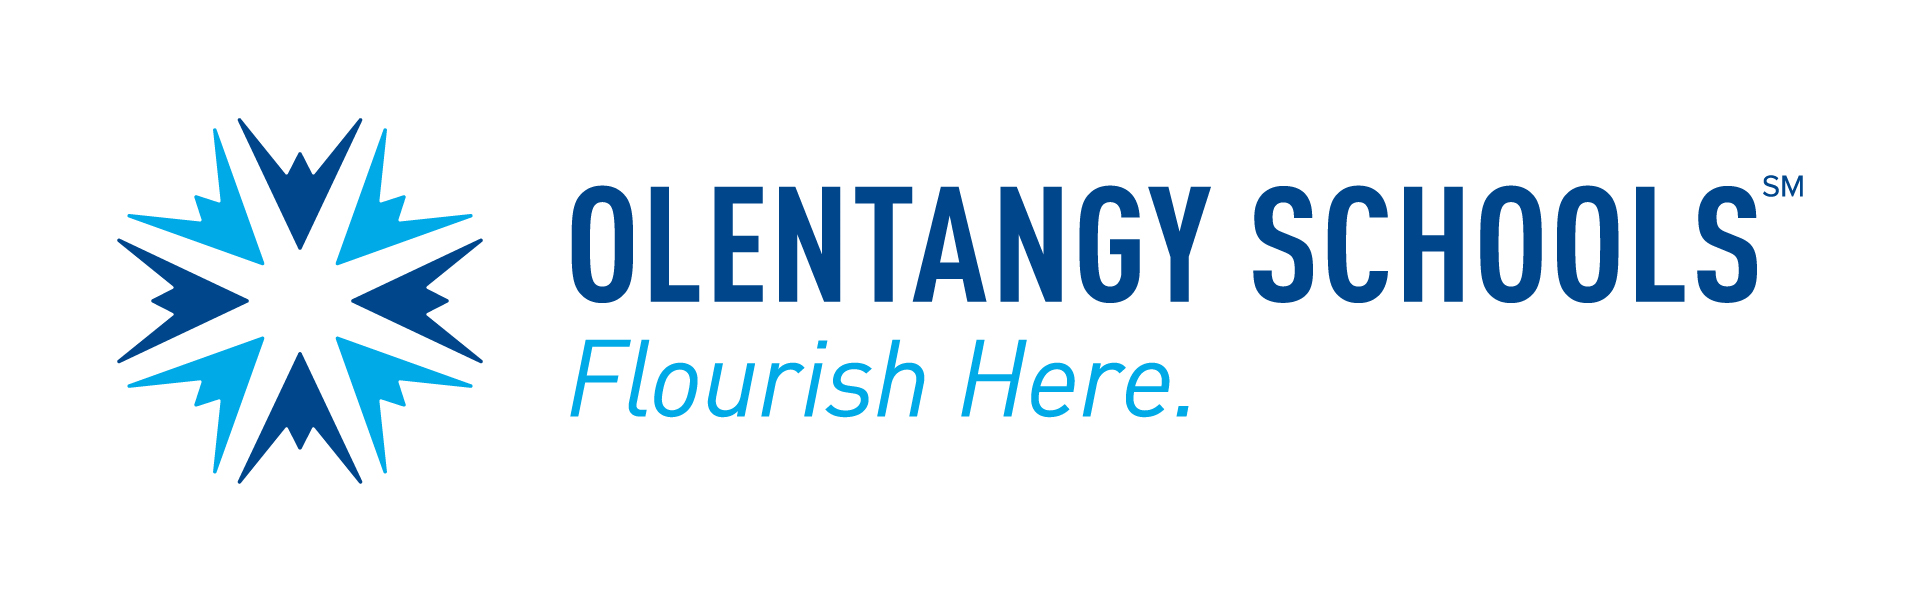 Olentangy Local School District logo